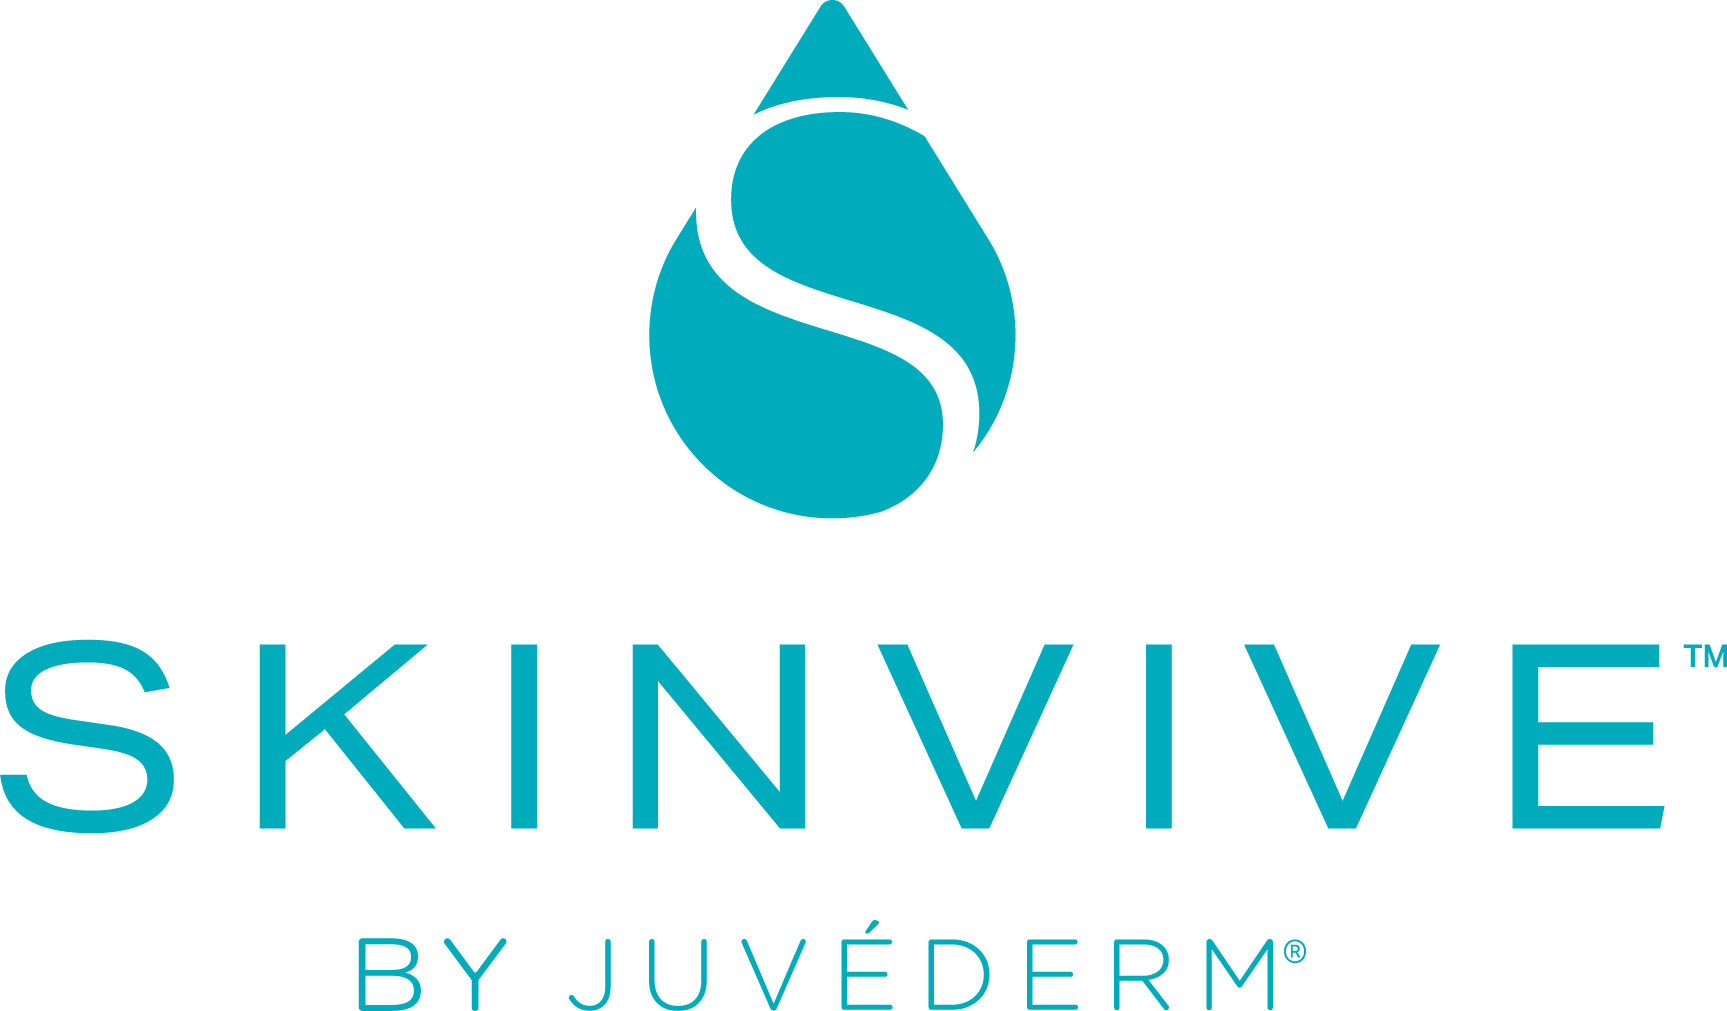 Skinvive by Juvederm in St. Petersburg, FL